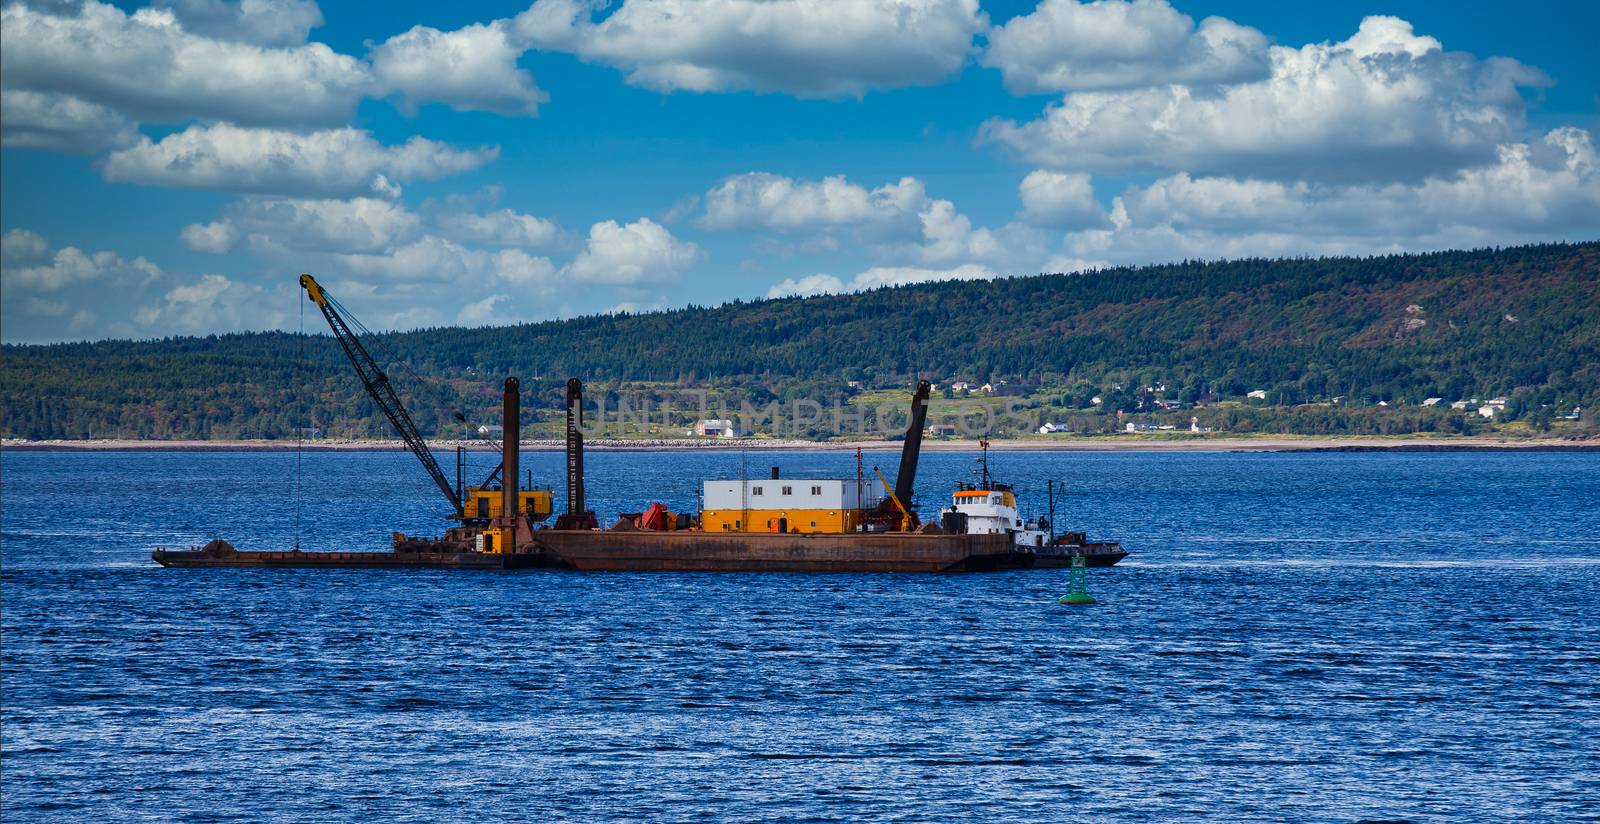 A working barge off the coast of Nova Scotia Canada